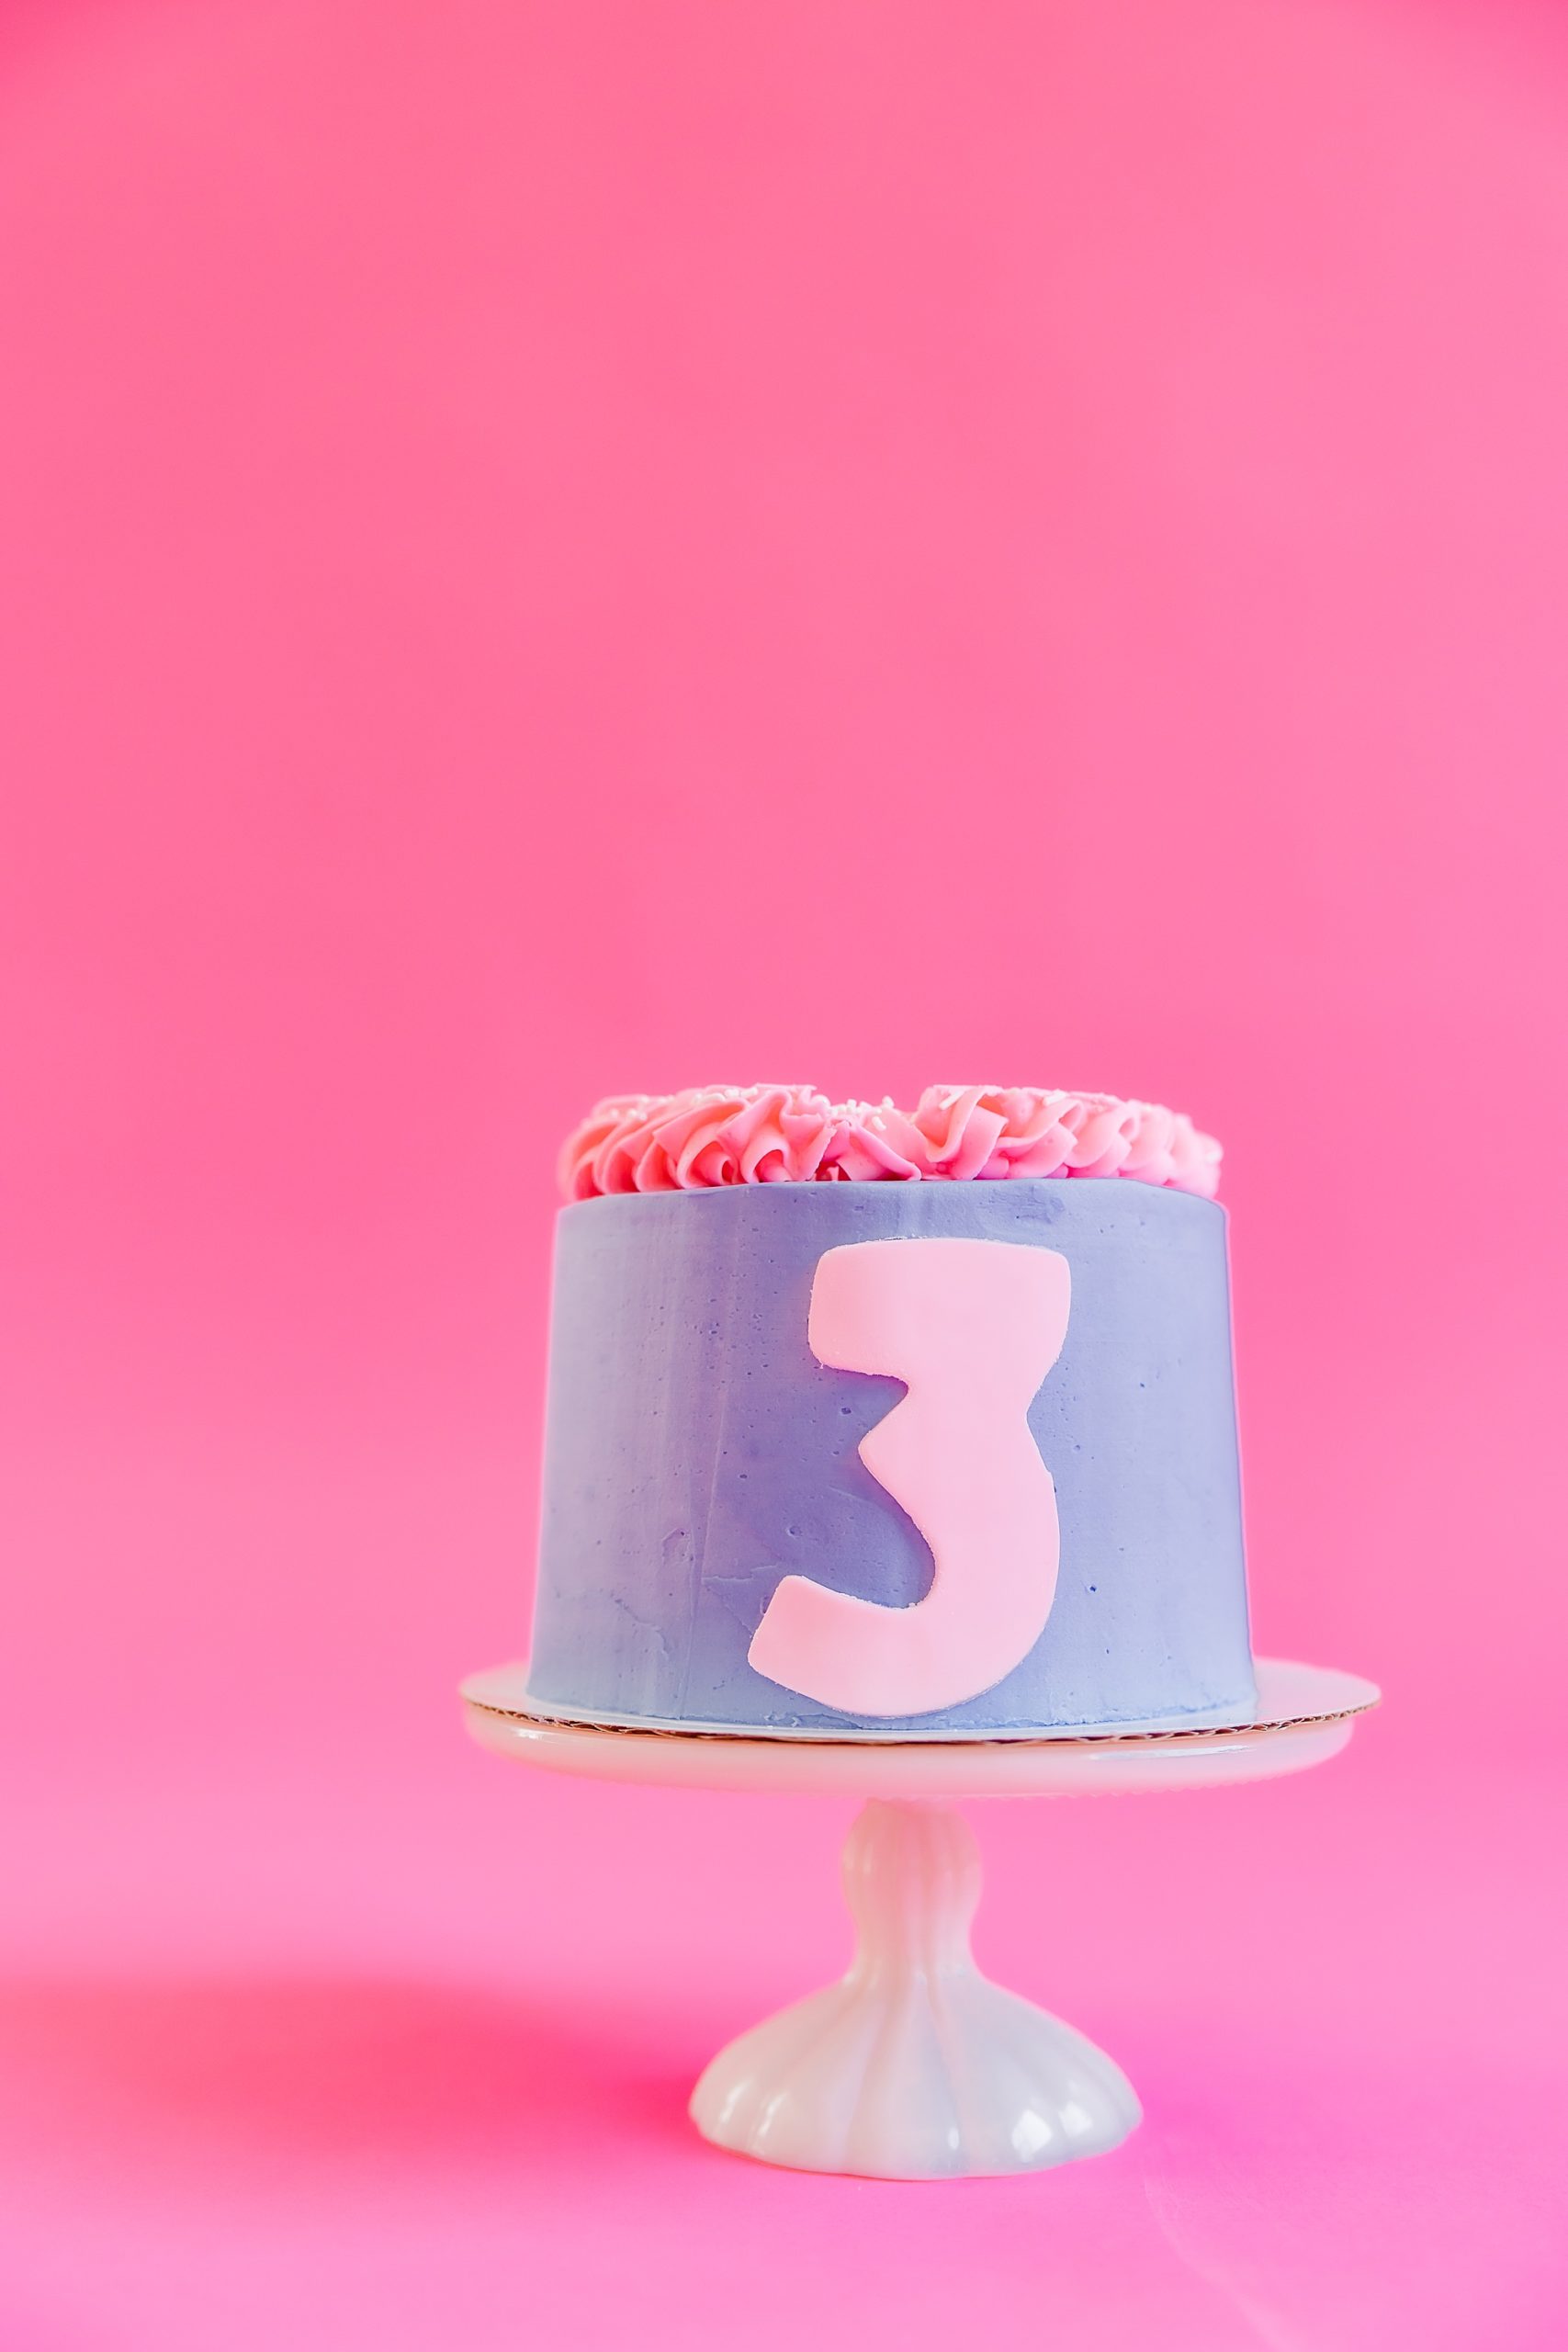 pink and purple cake for playful branding portraits cake smash